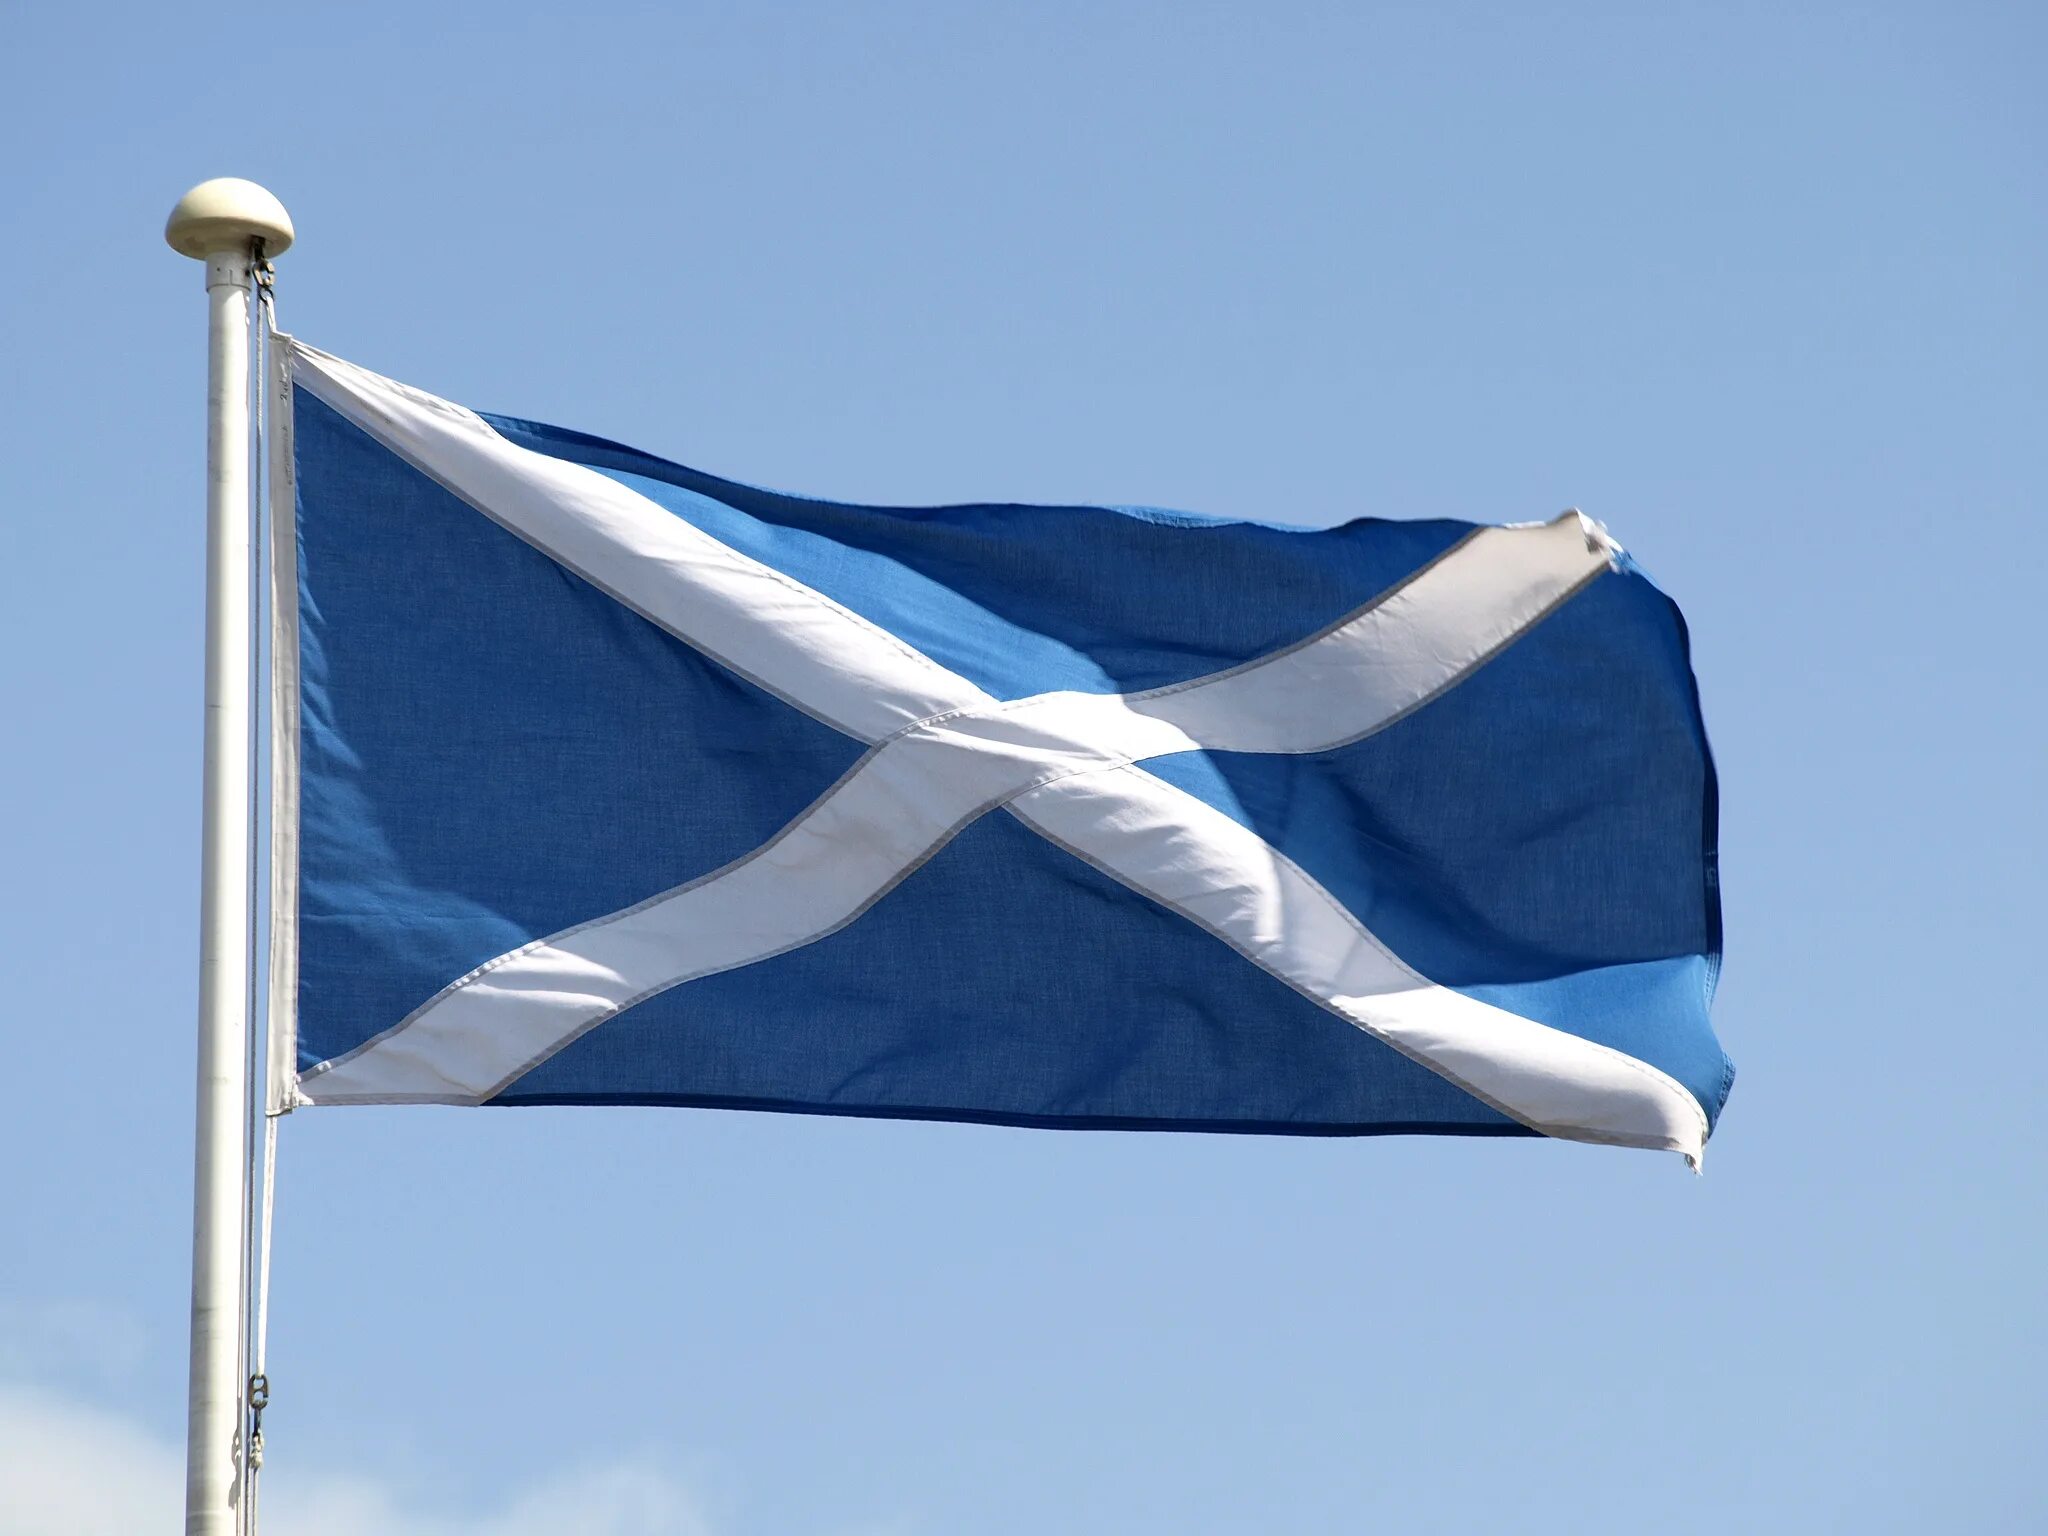 На борту холера бело синий флаг. Скотланд флаг. Бело сине белый флаг 2022. Флаг Шотландии. Штандарт Шотландии.